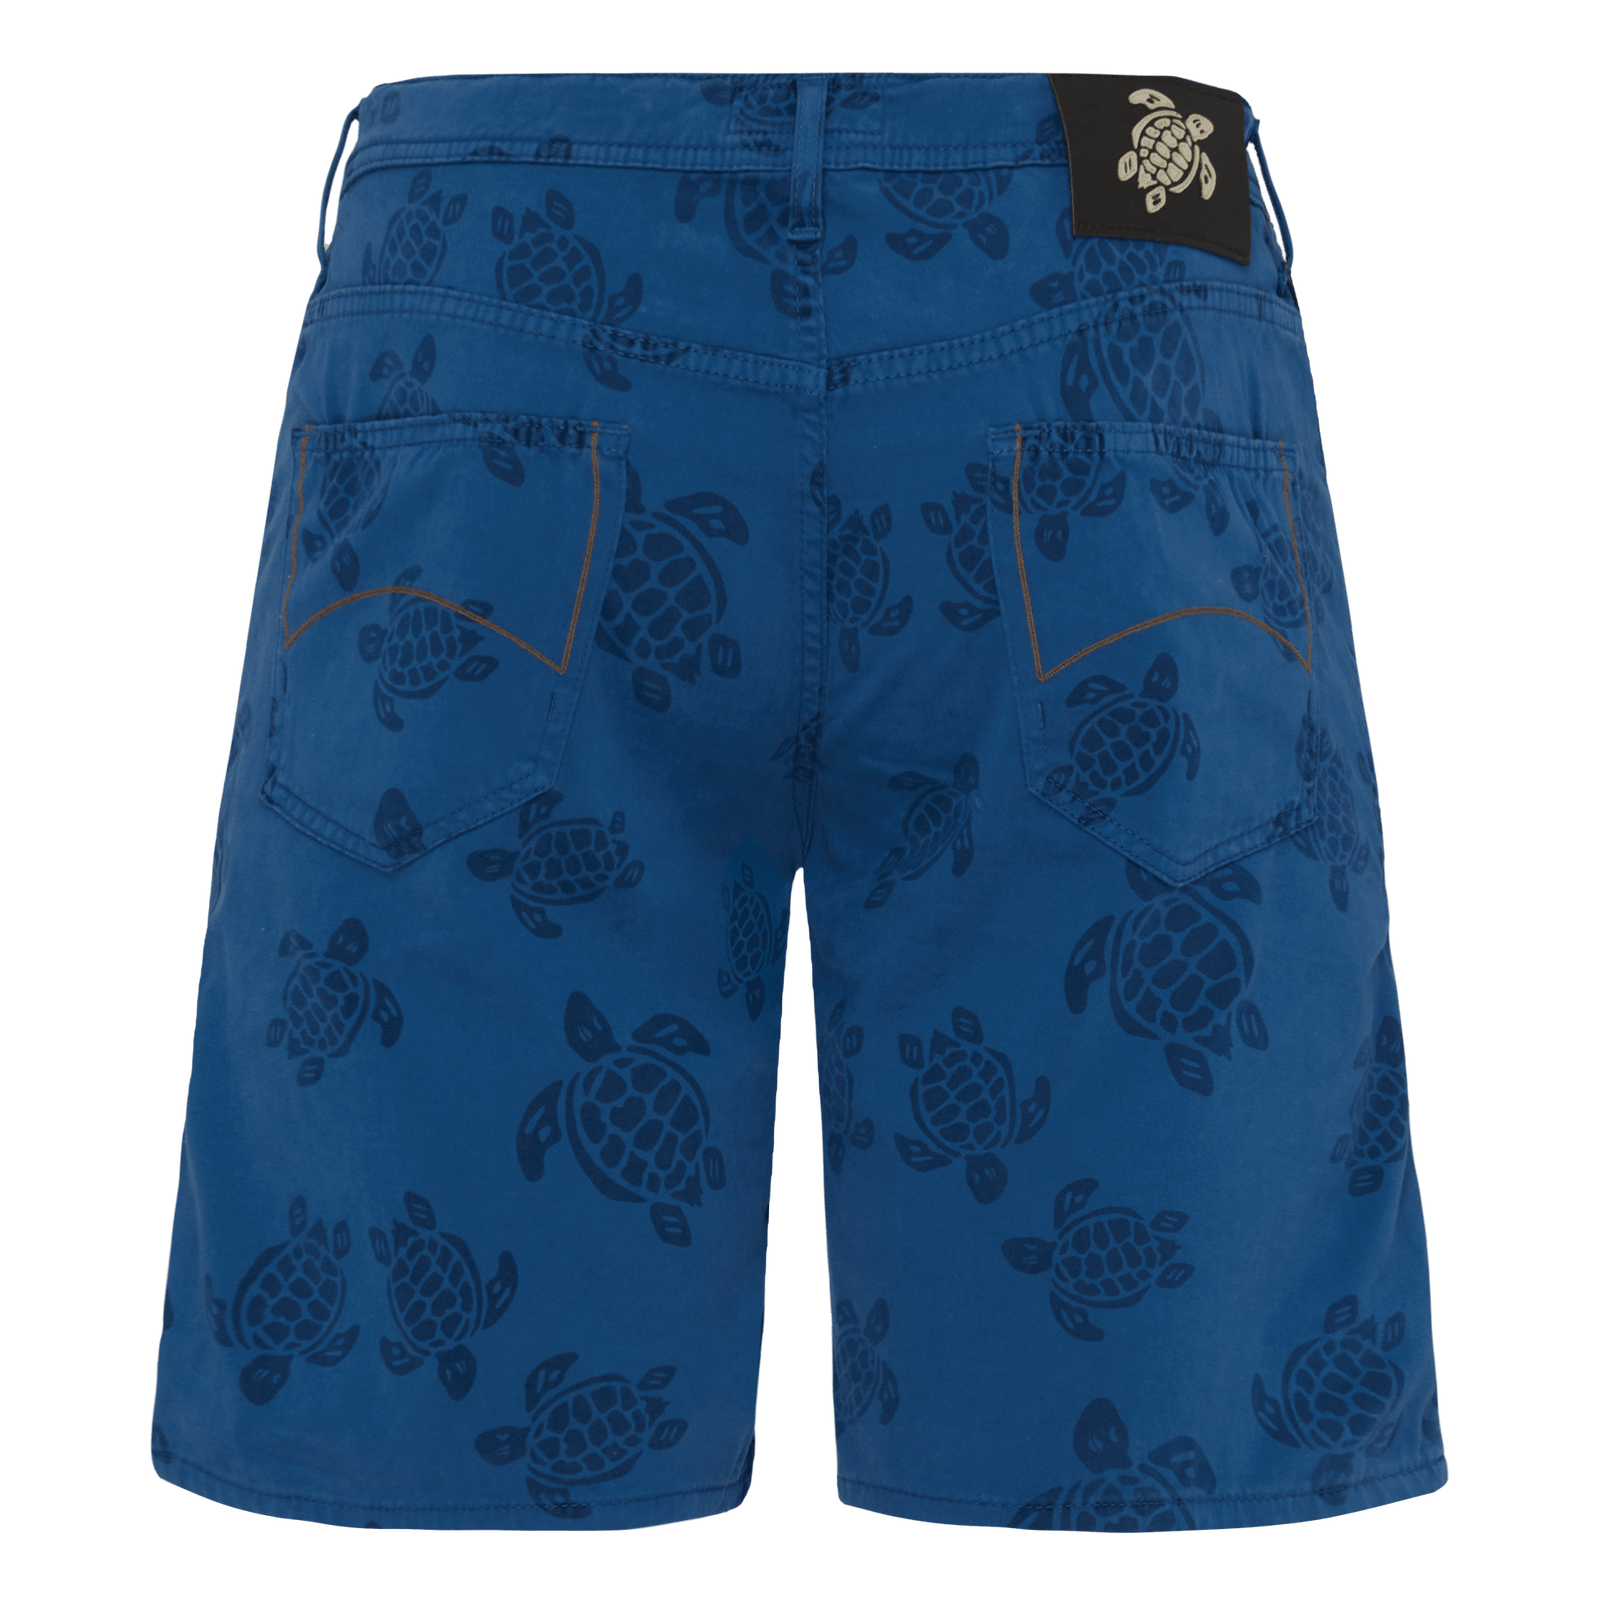 Vilebrequin 5-Pockets Bermuda Shorts Ronde Des Tortues in Blue